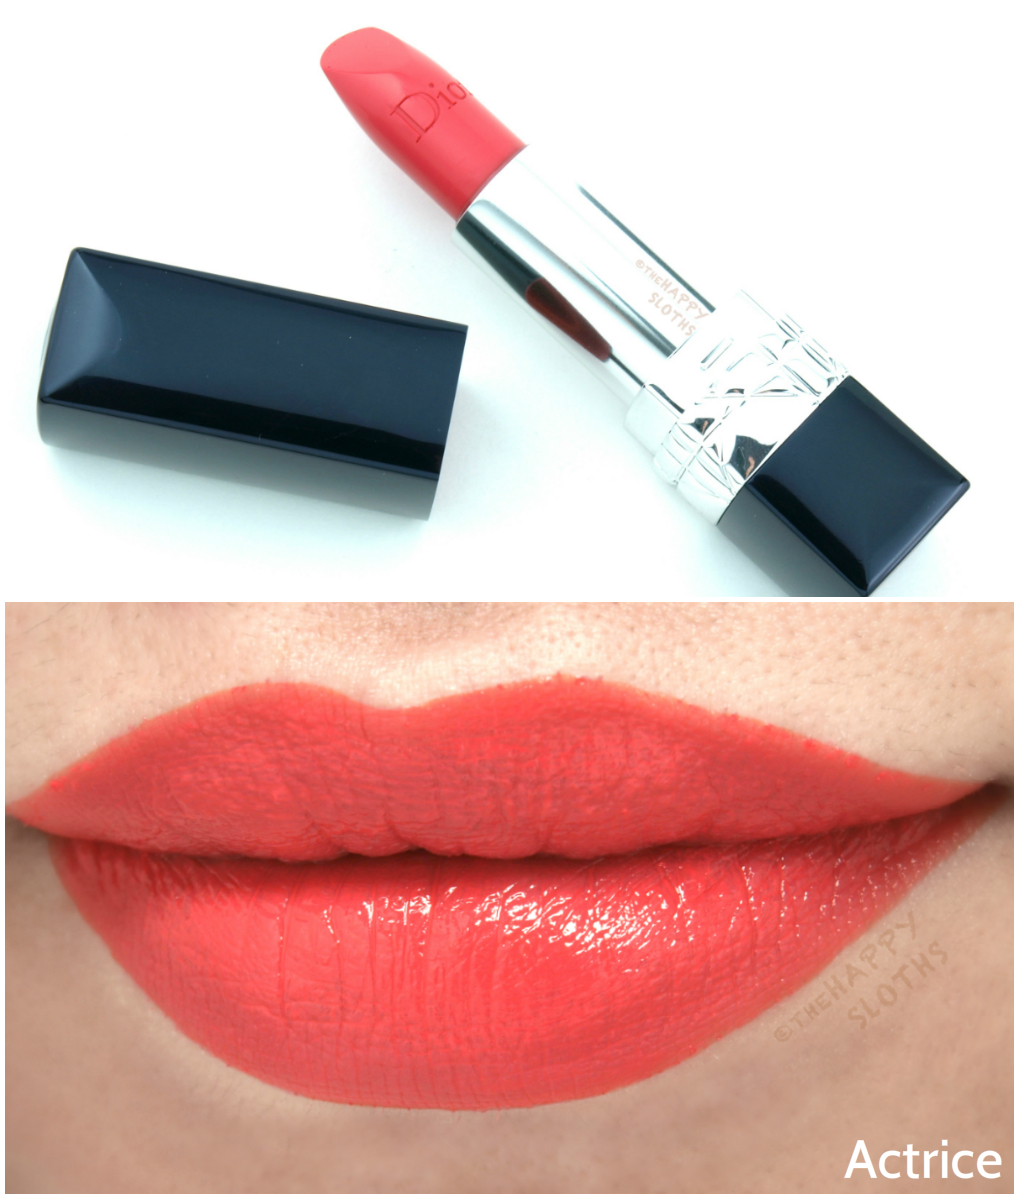 dior 047 lipstick